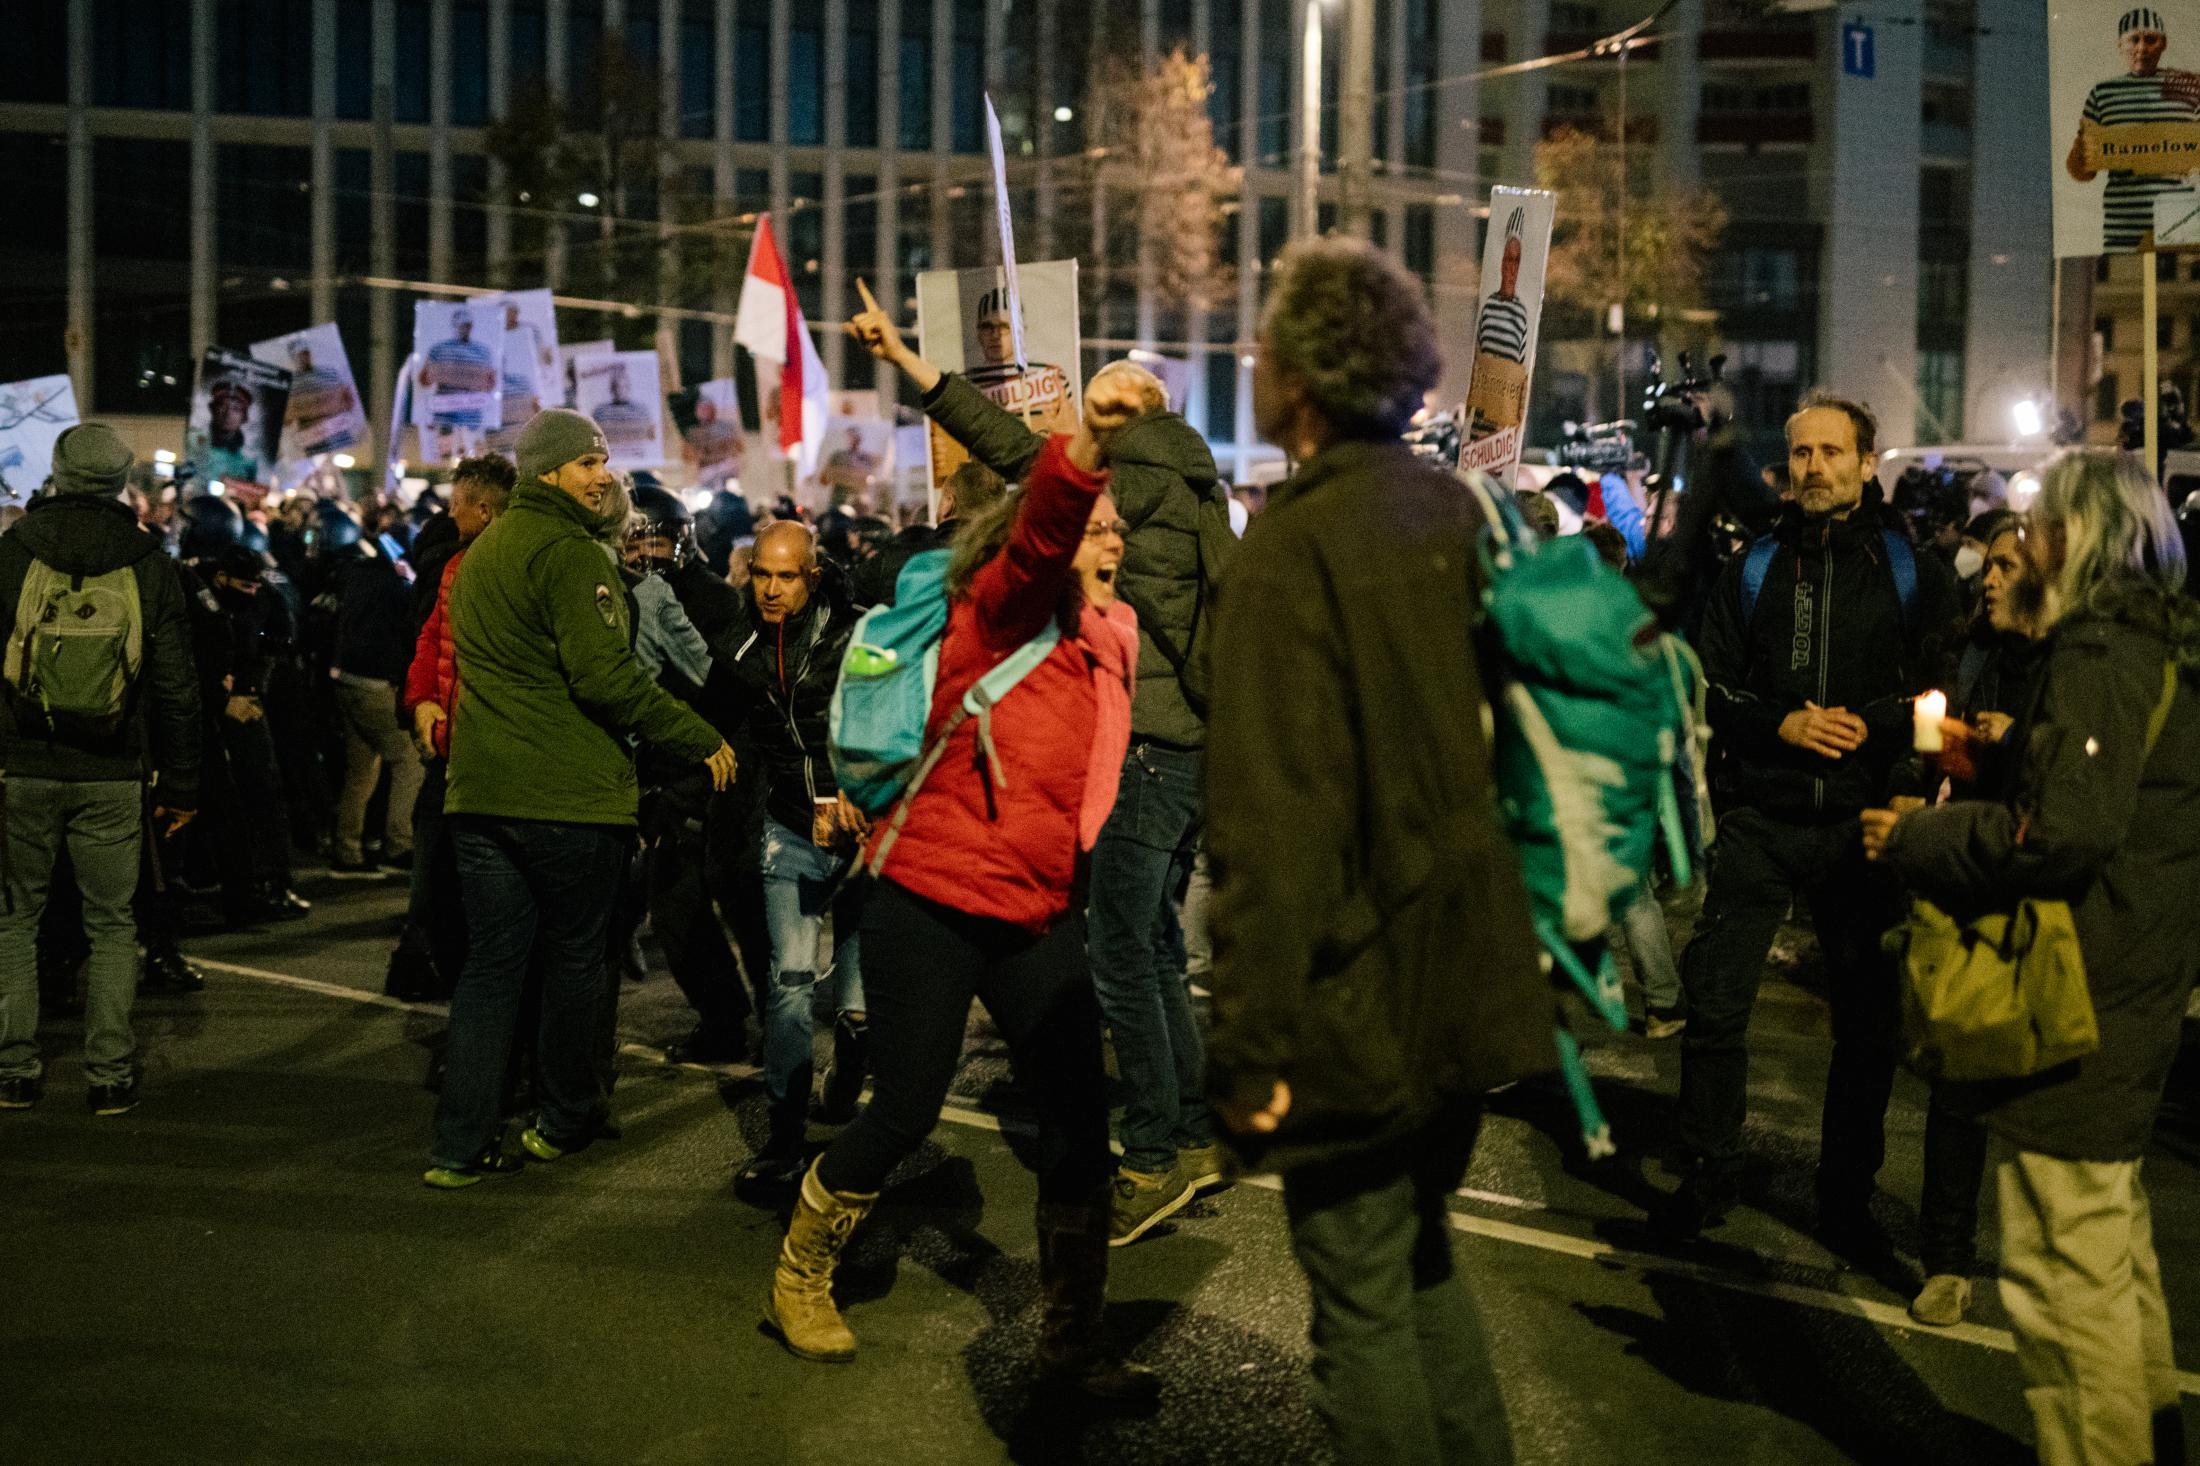 Protest & Events - "Querdenken" protest in Leipzig